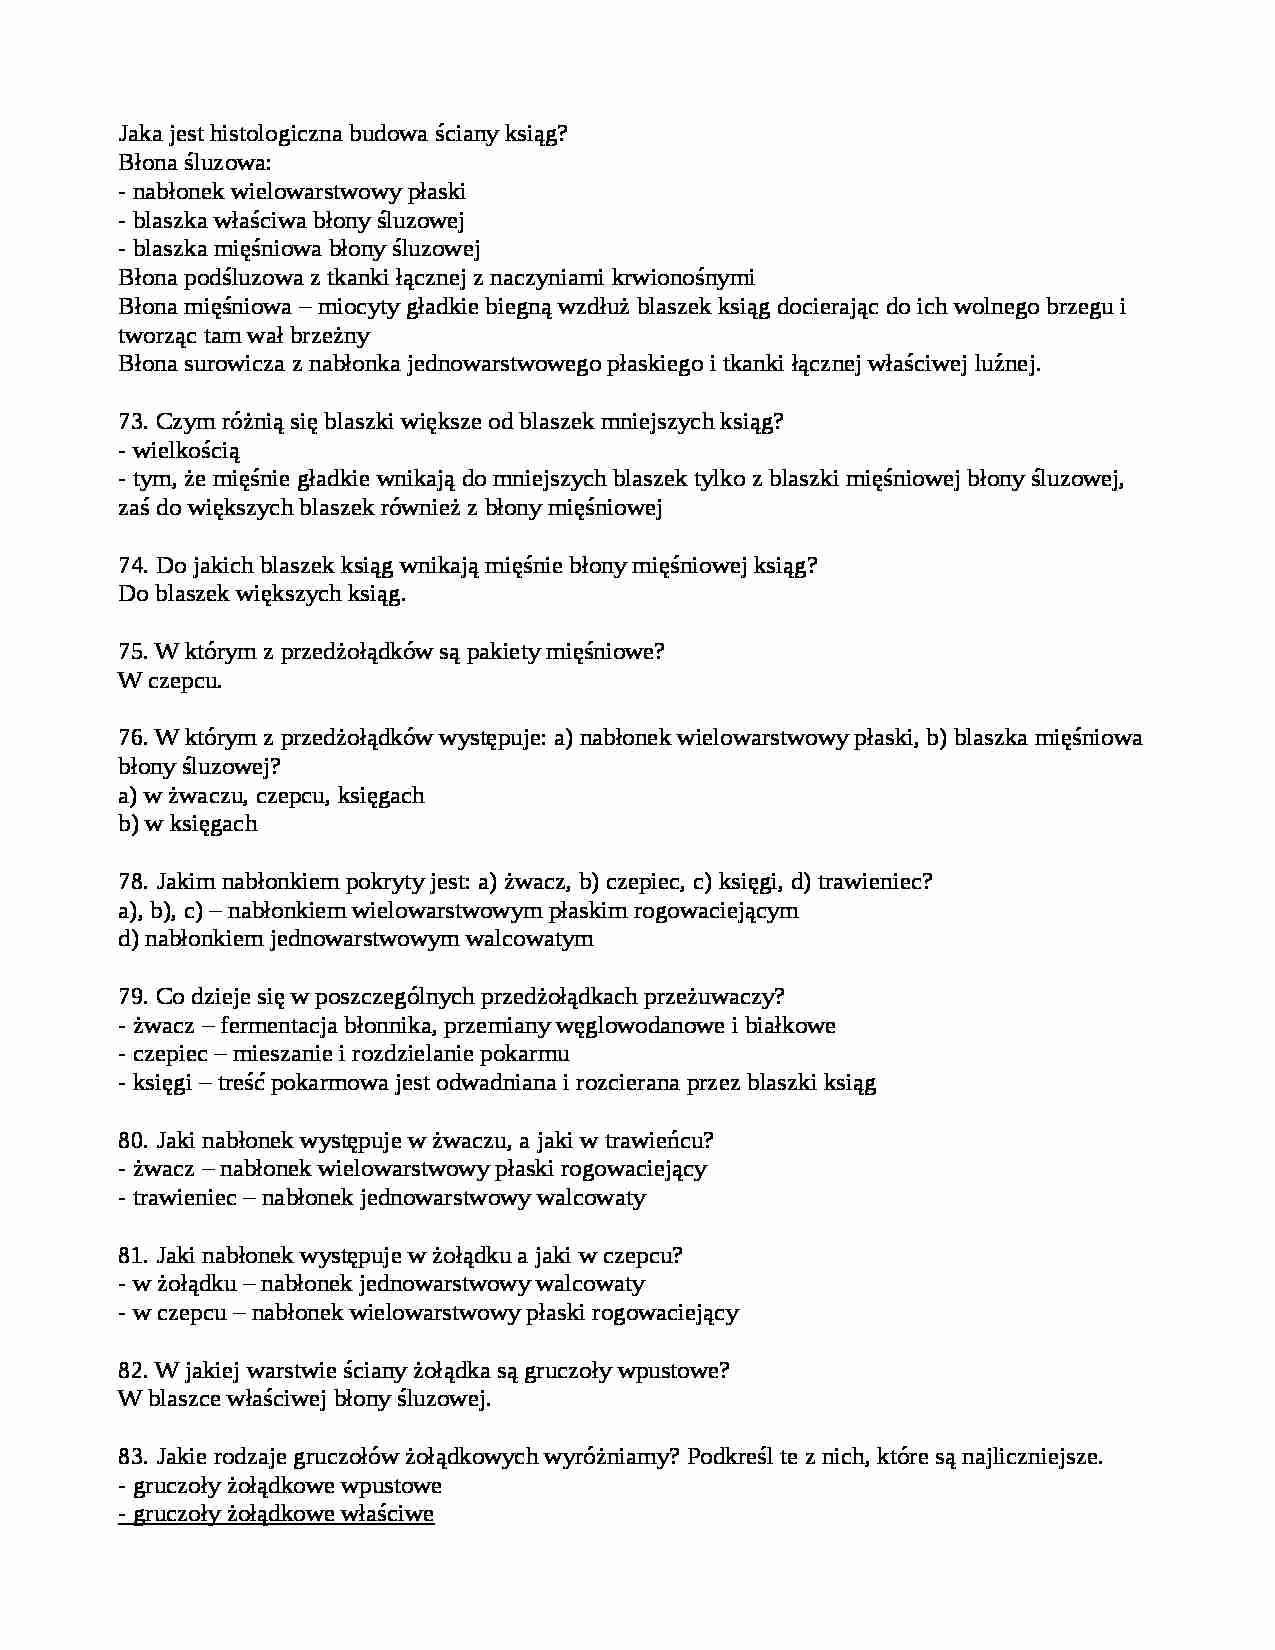 Histologia - zagadnienia egzaminacyjne  - strona 1